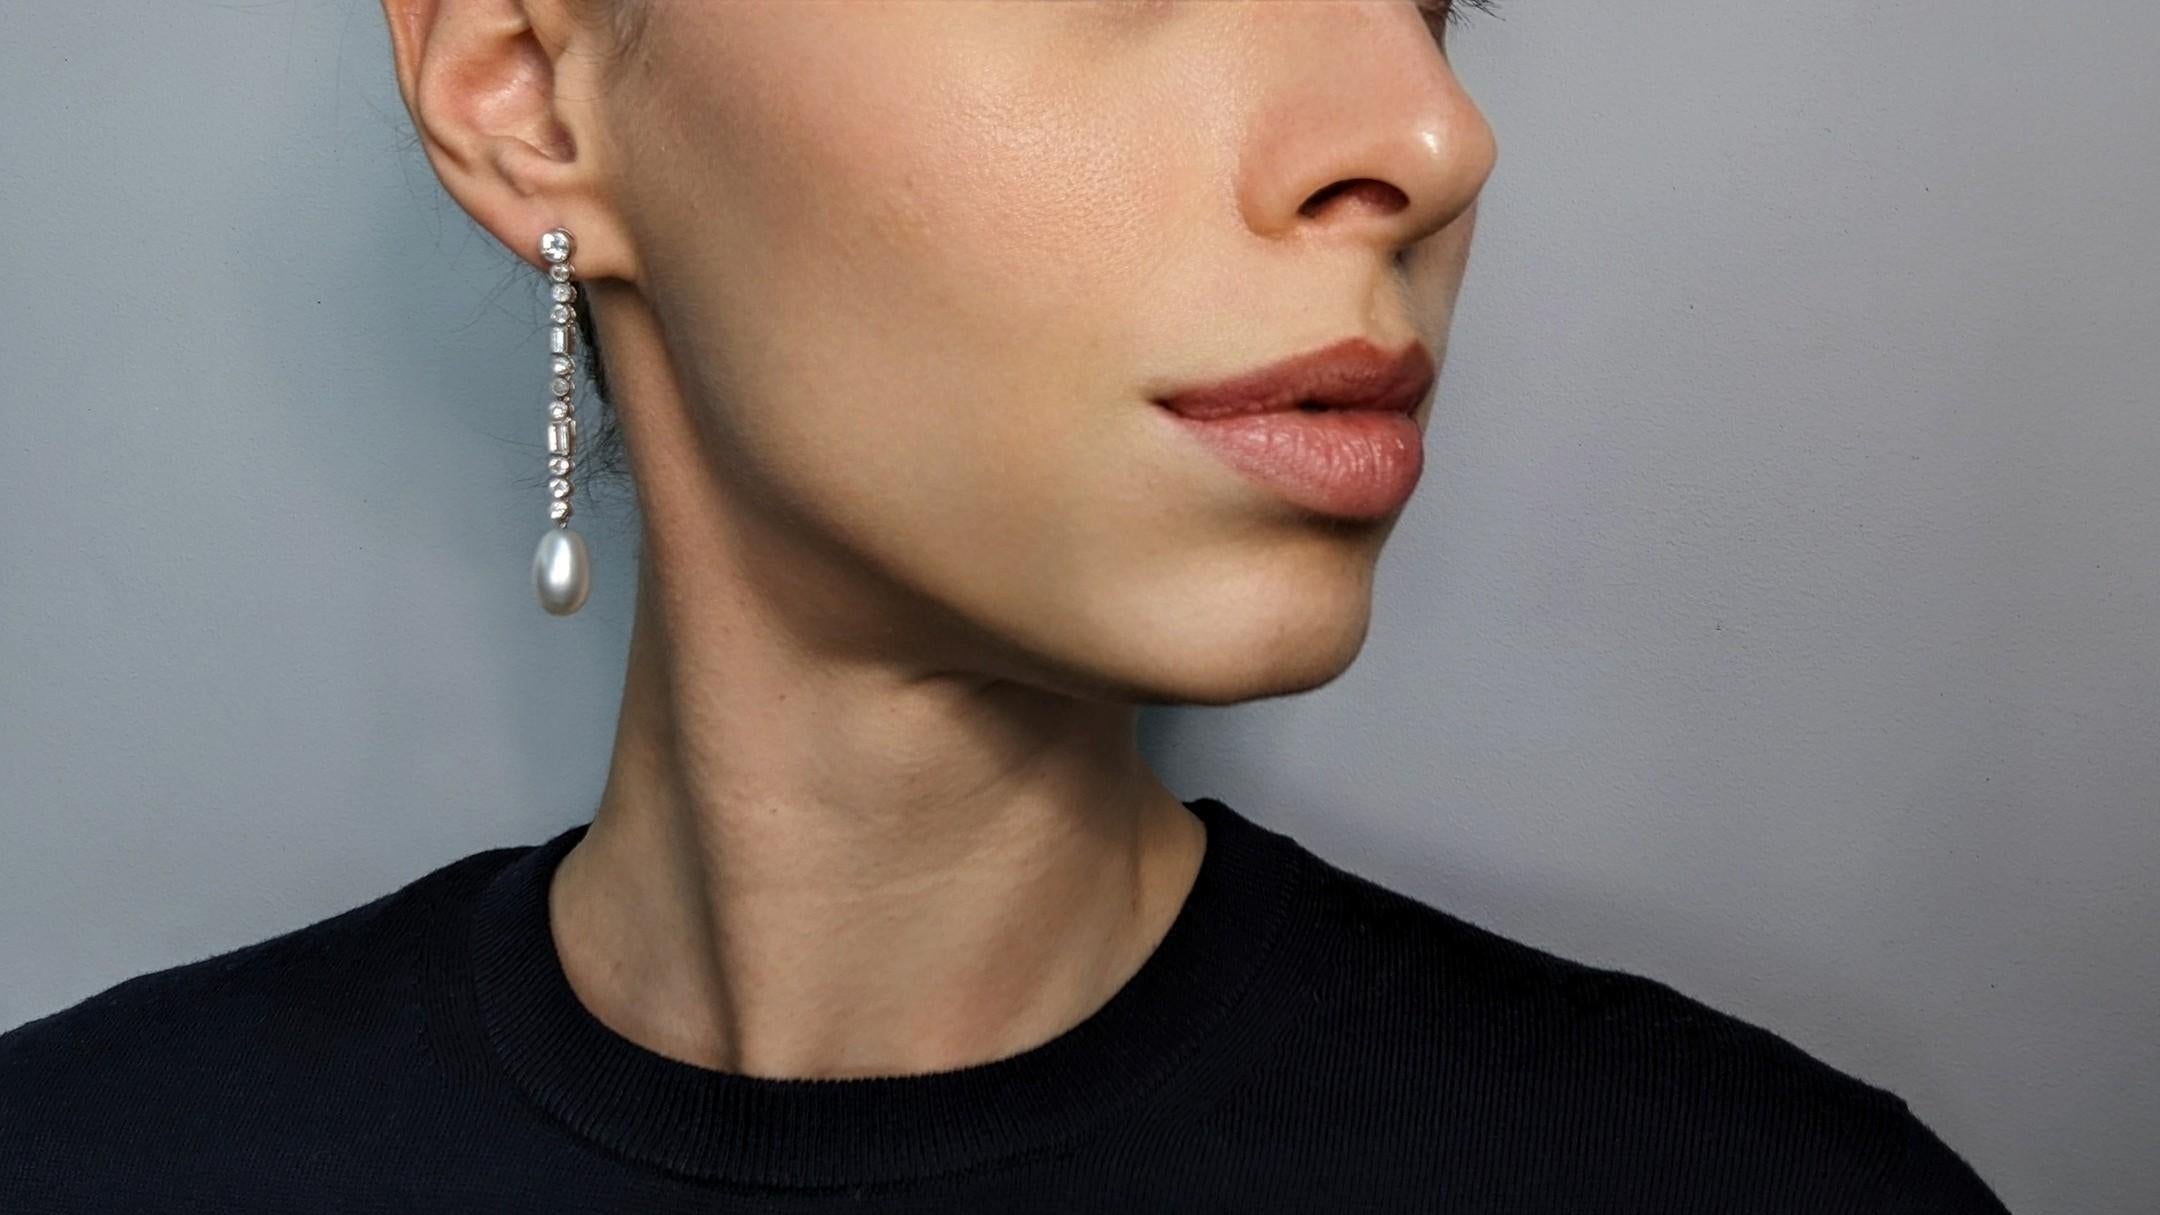 Art Deco Saltwater Natural Pearl Earring